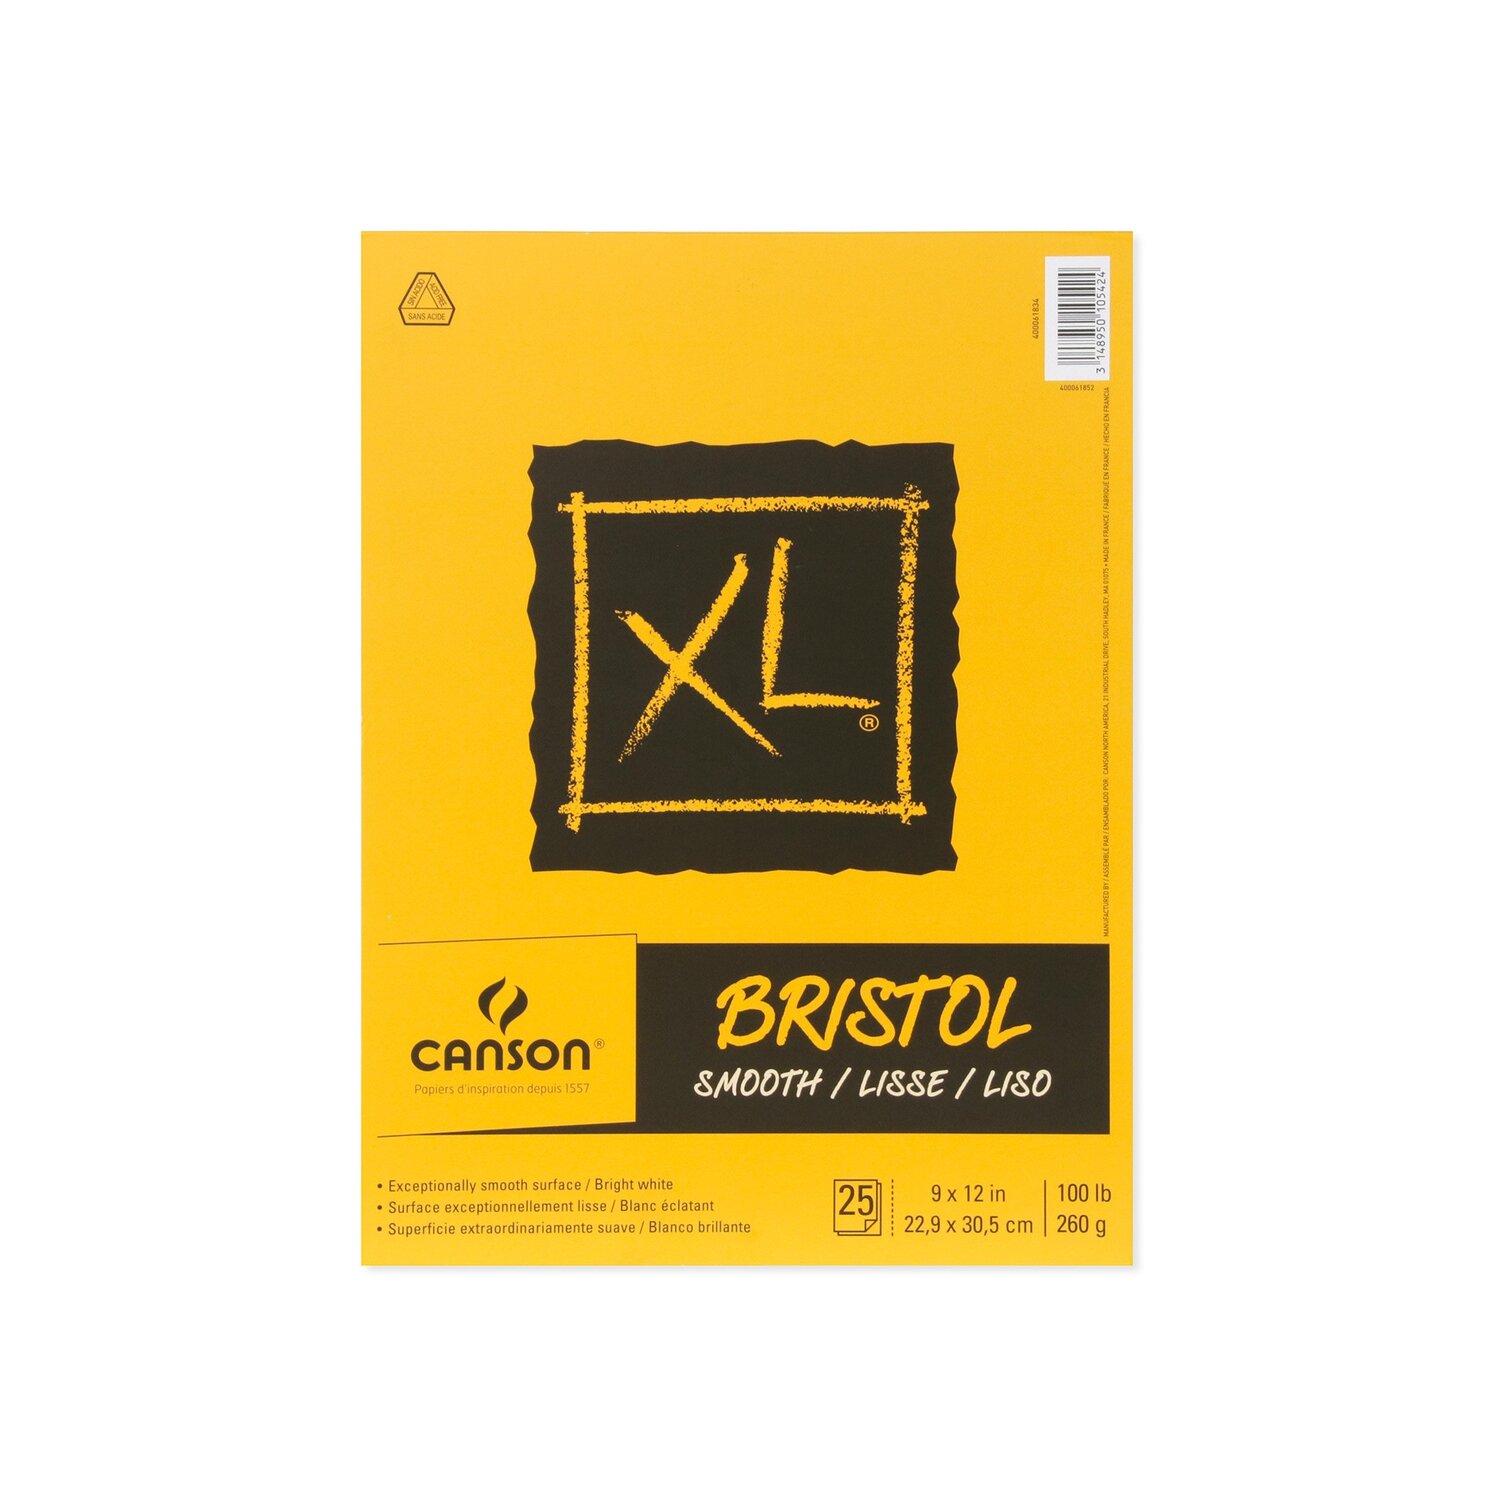 XL Bristol Sketchbook Pads, Bristol Paper, Canson